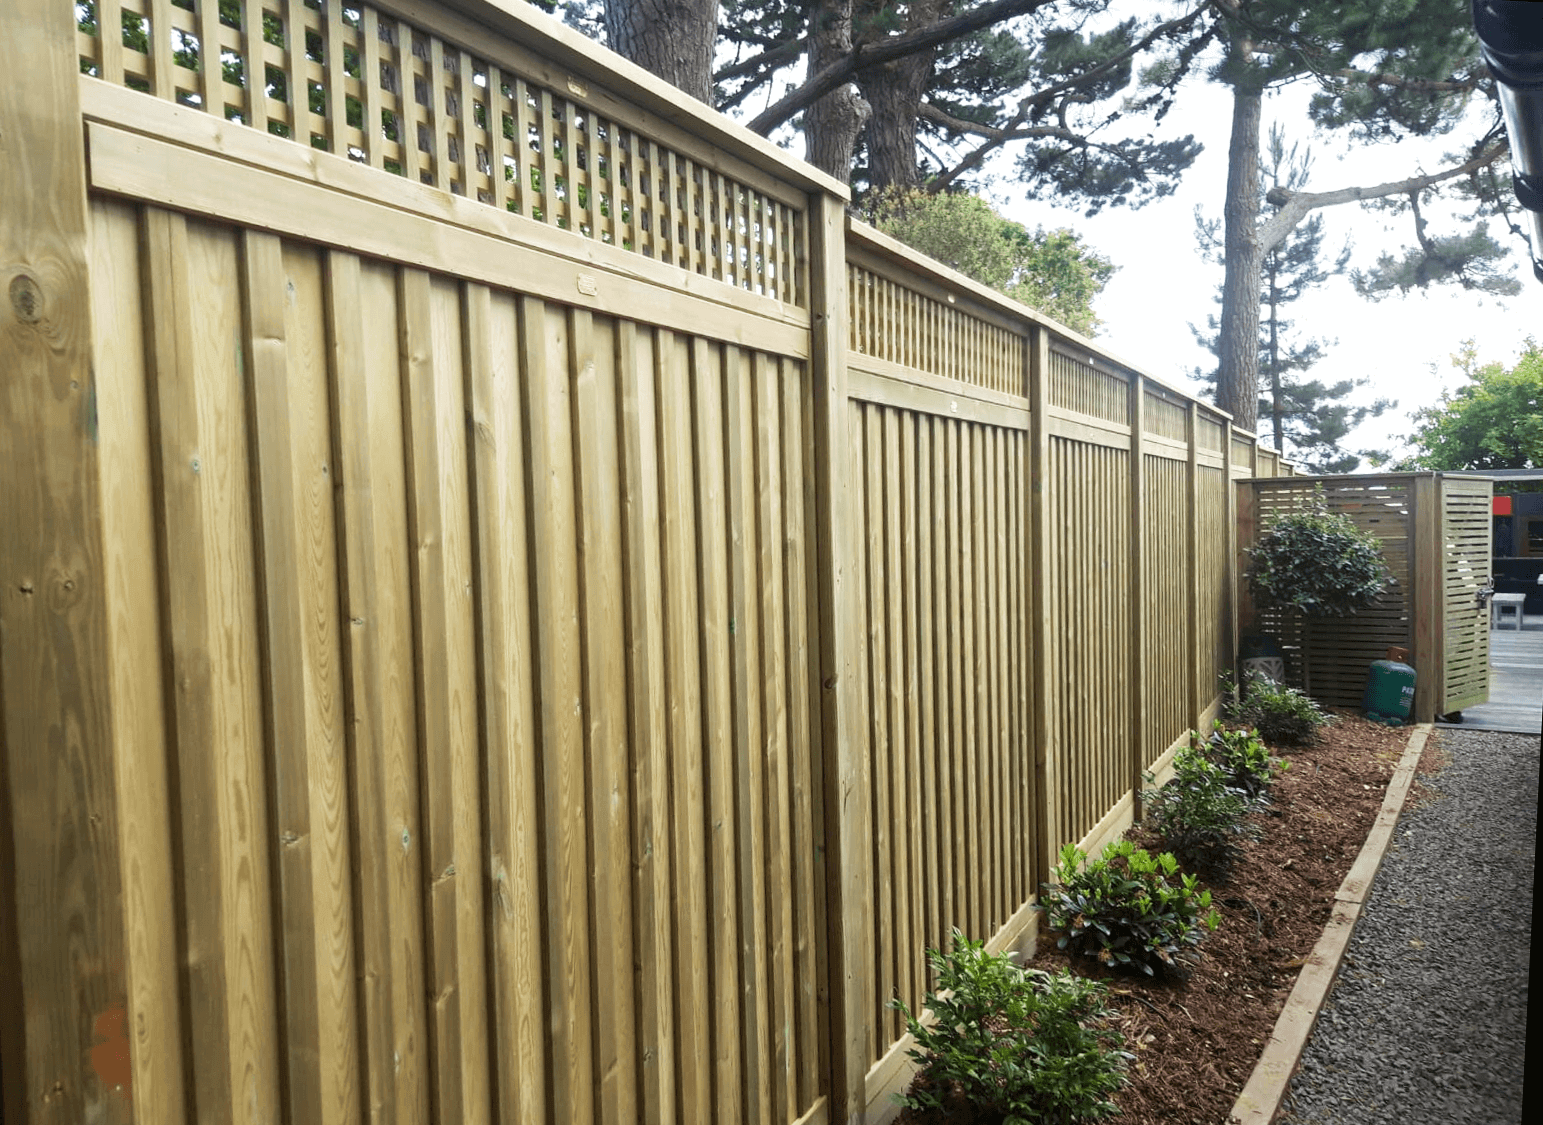 Chilham fence panel and lattice trellis